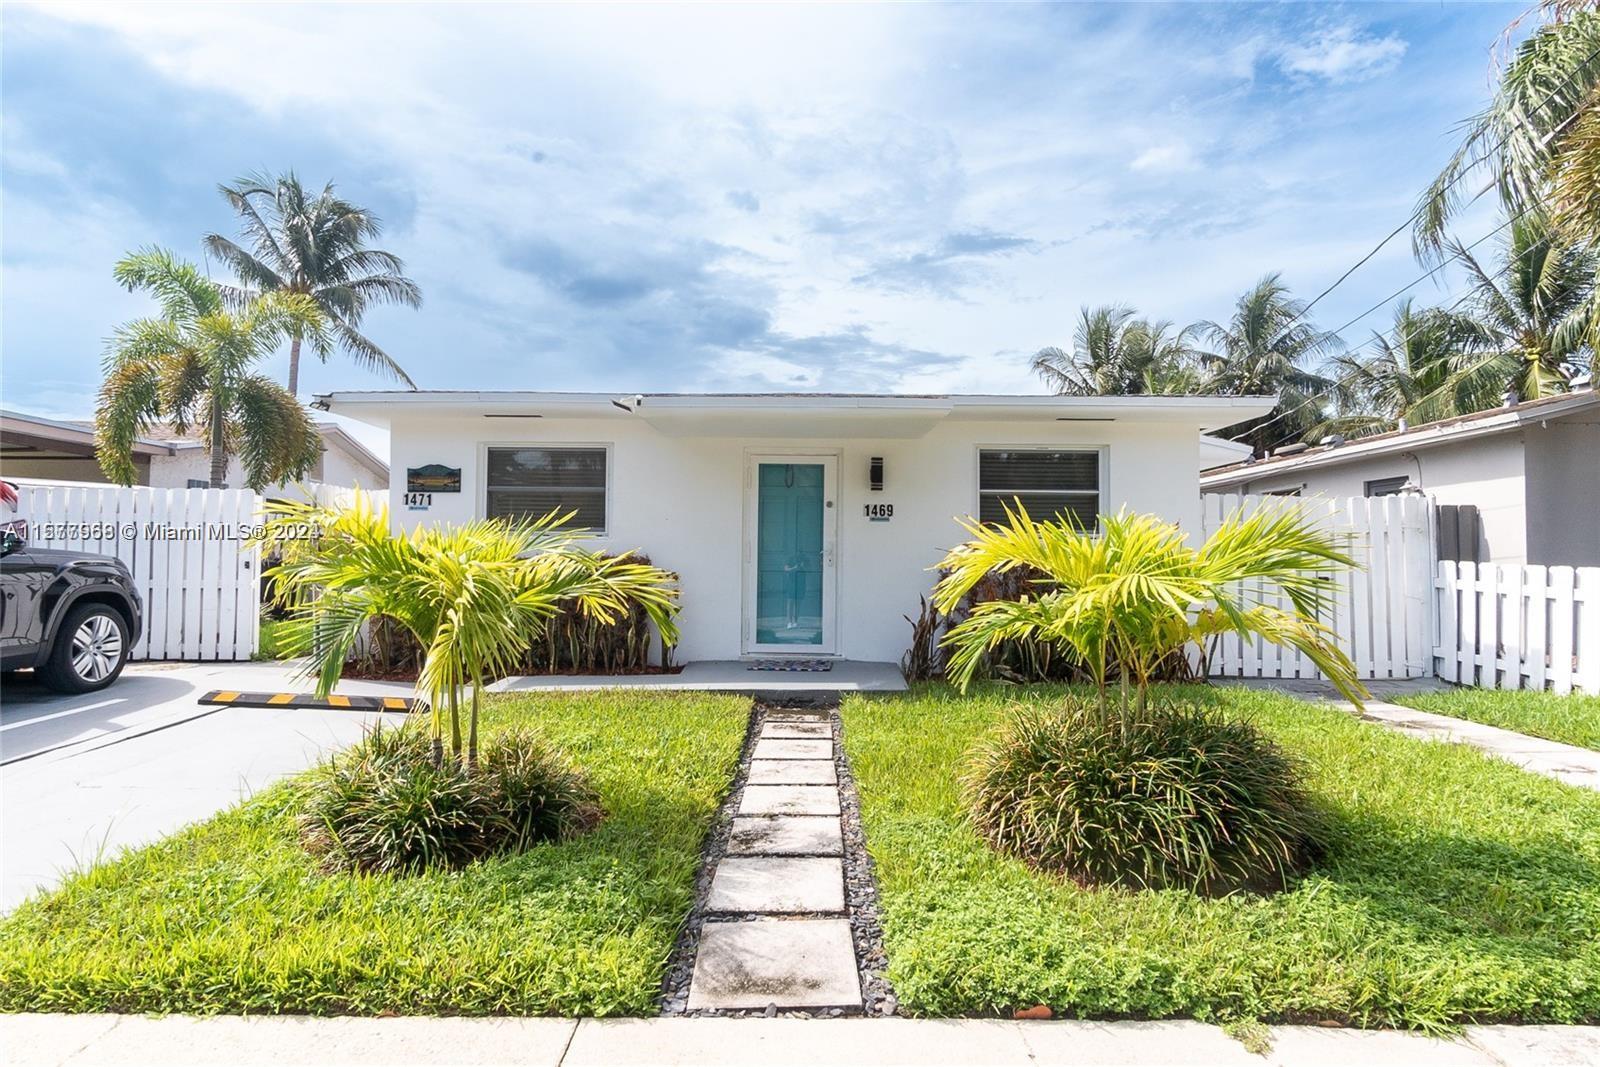 Rental Property at 14691471 Nw 10th St, Dania Beach, Miami-Dade County, Florida -  - $895,000 MO.